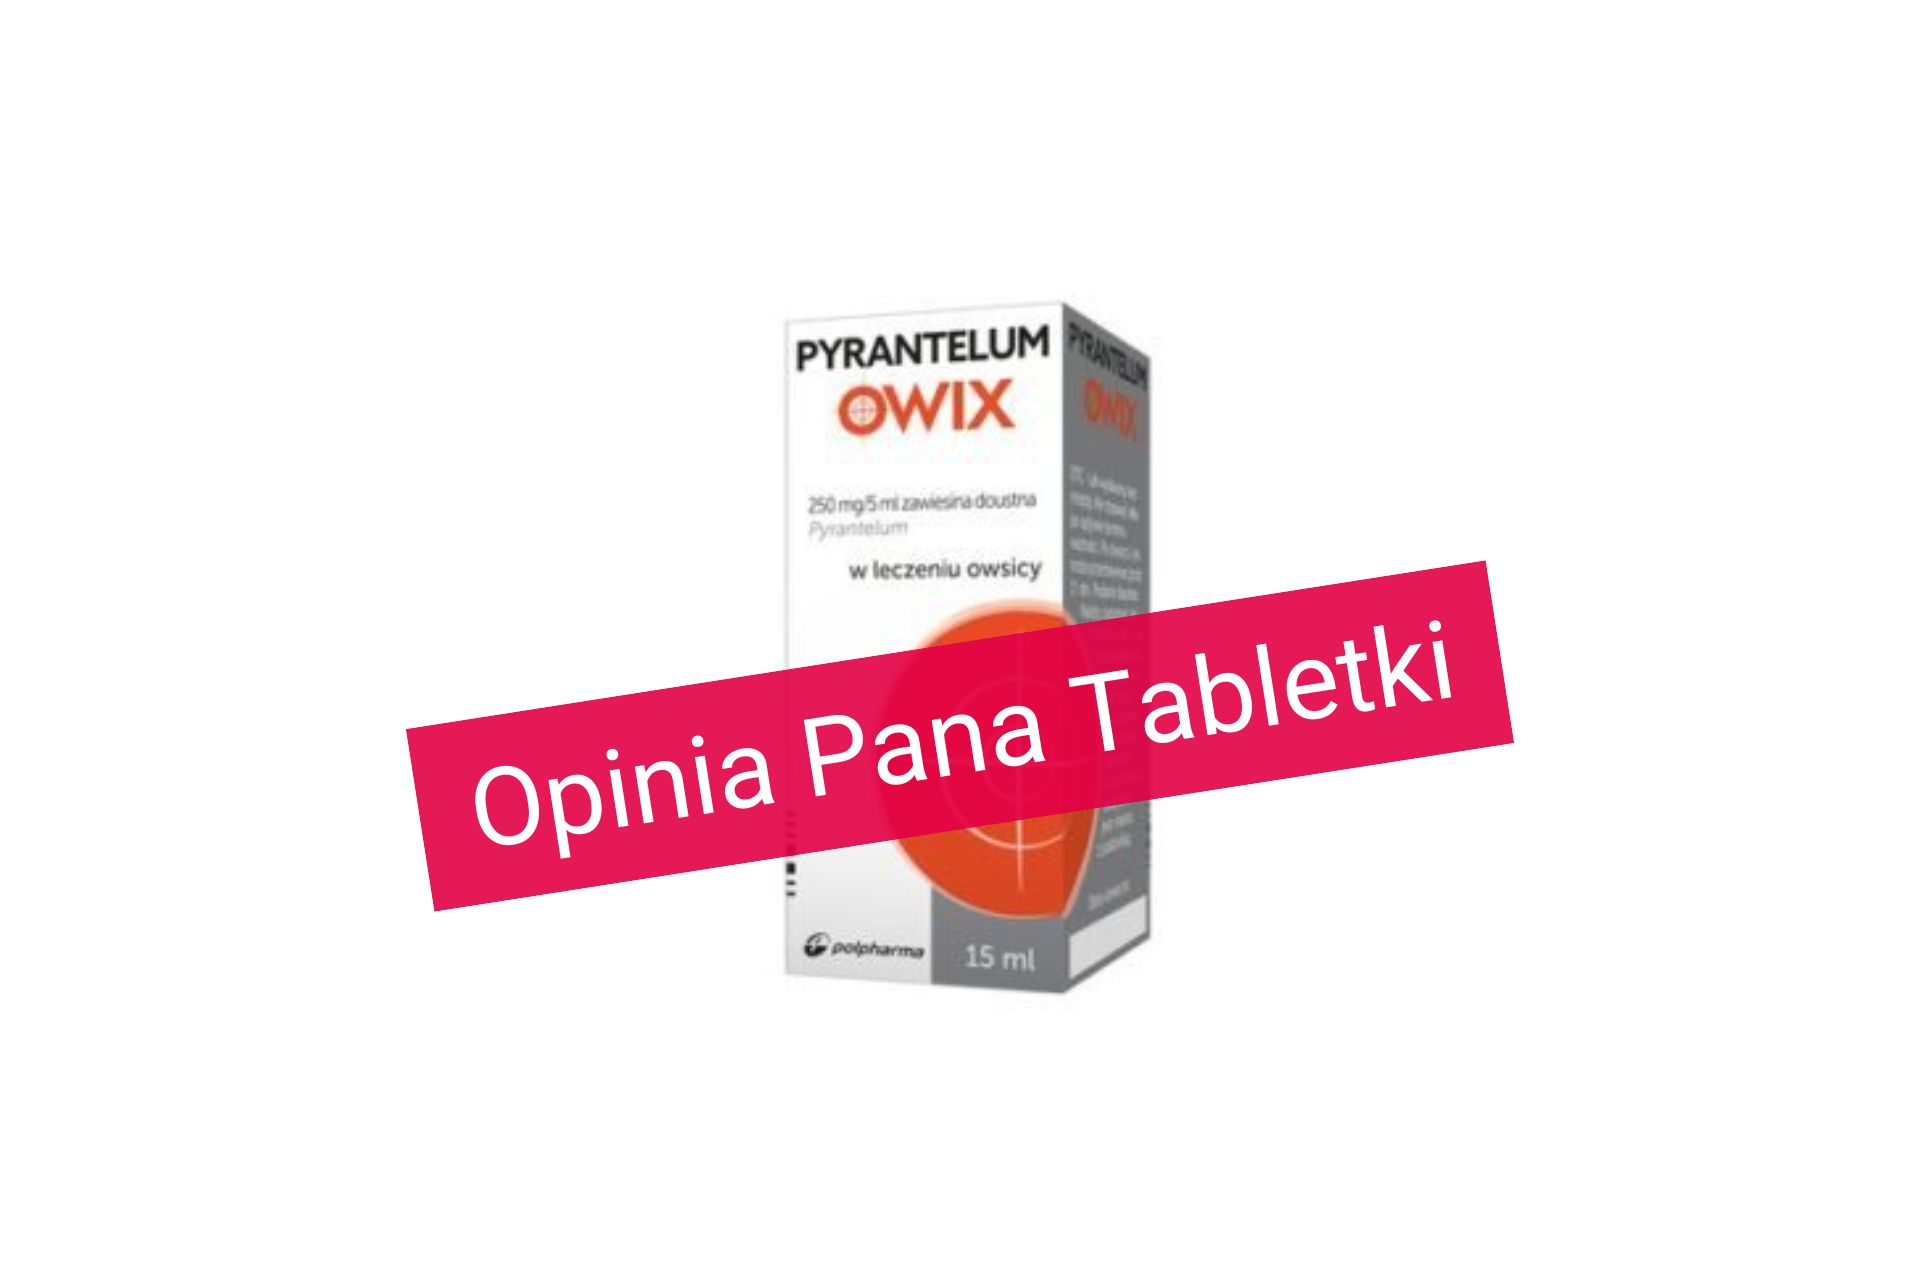 pyrantelum owix analiza i opinia pan tabletka